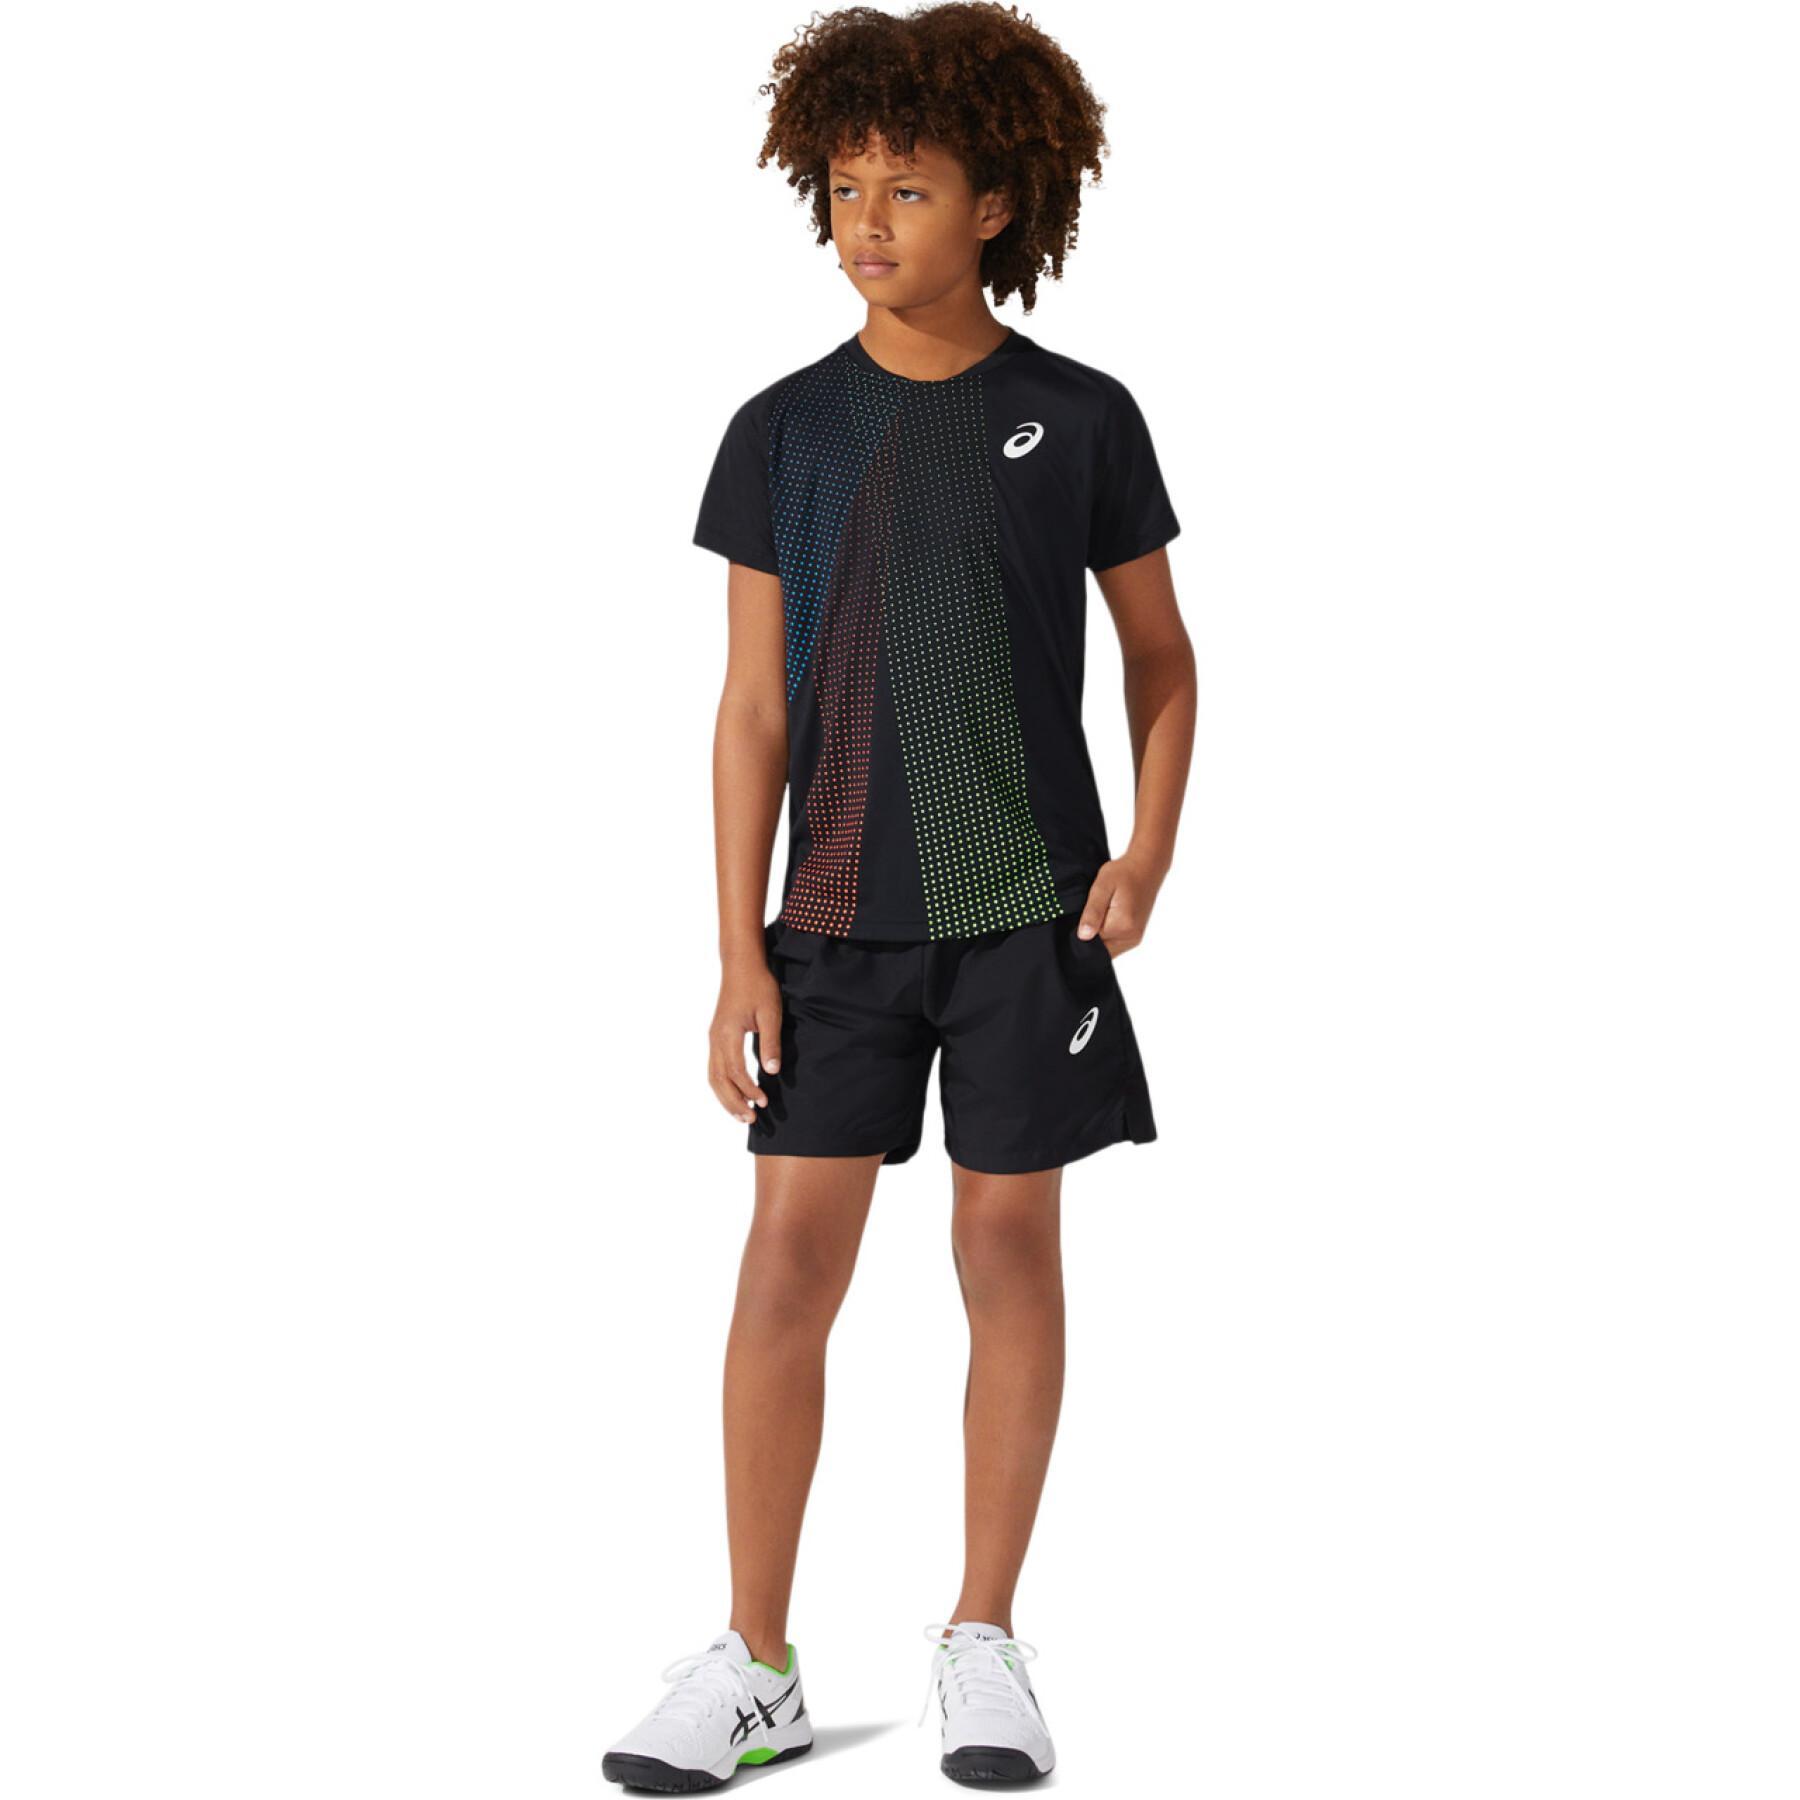 Camiseta sin mangas para niños Asics Boys Tennis Graphic